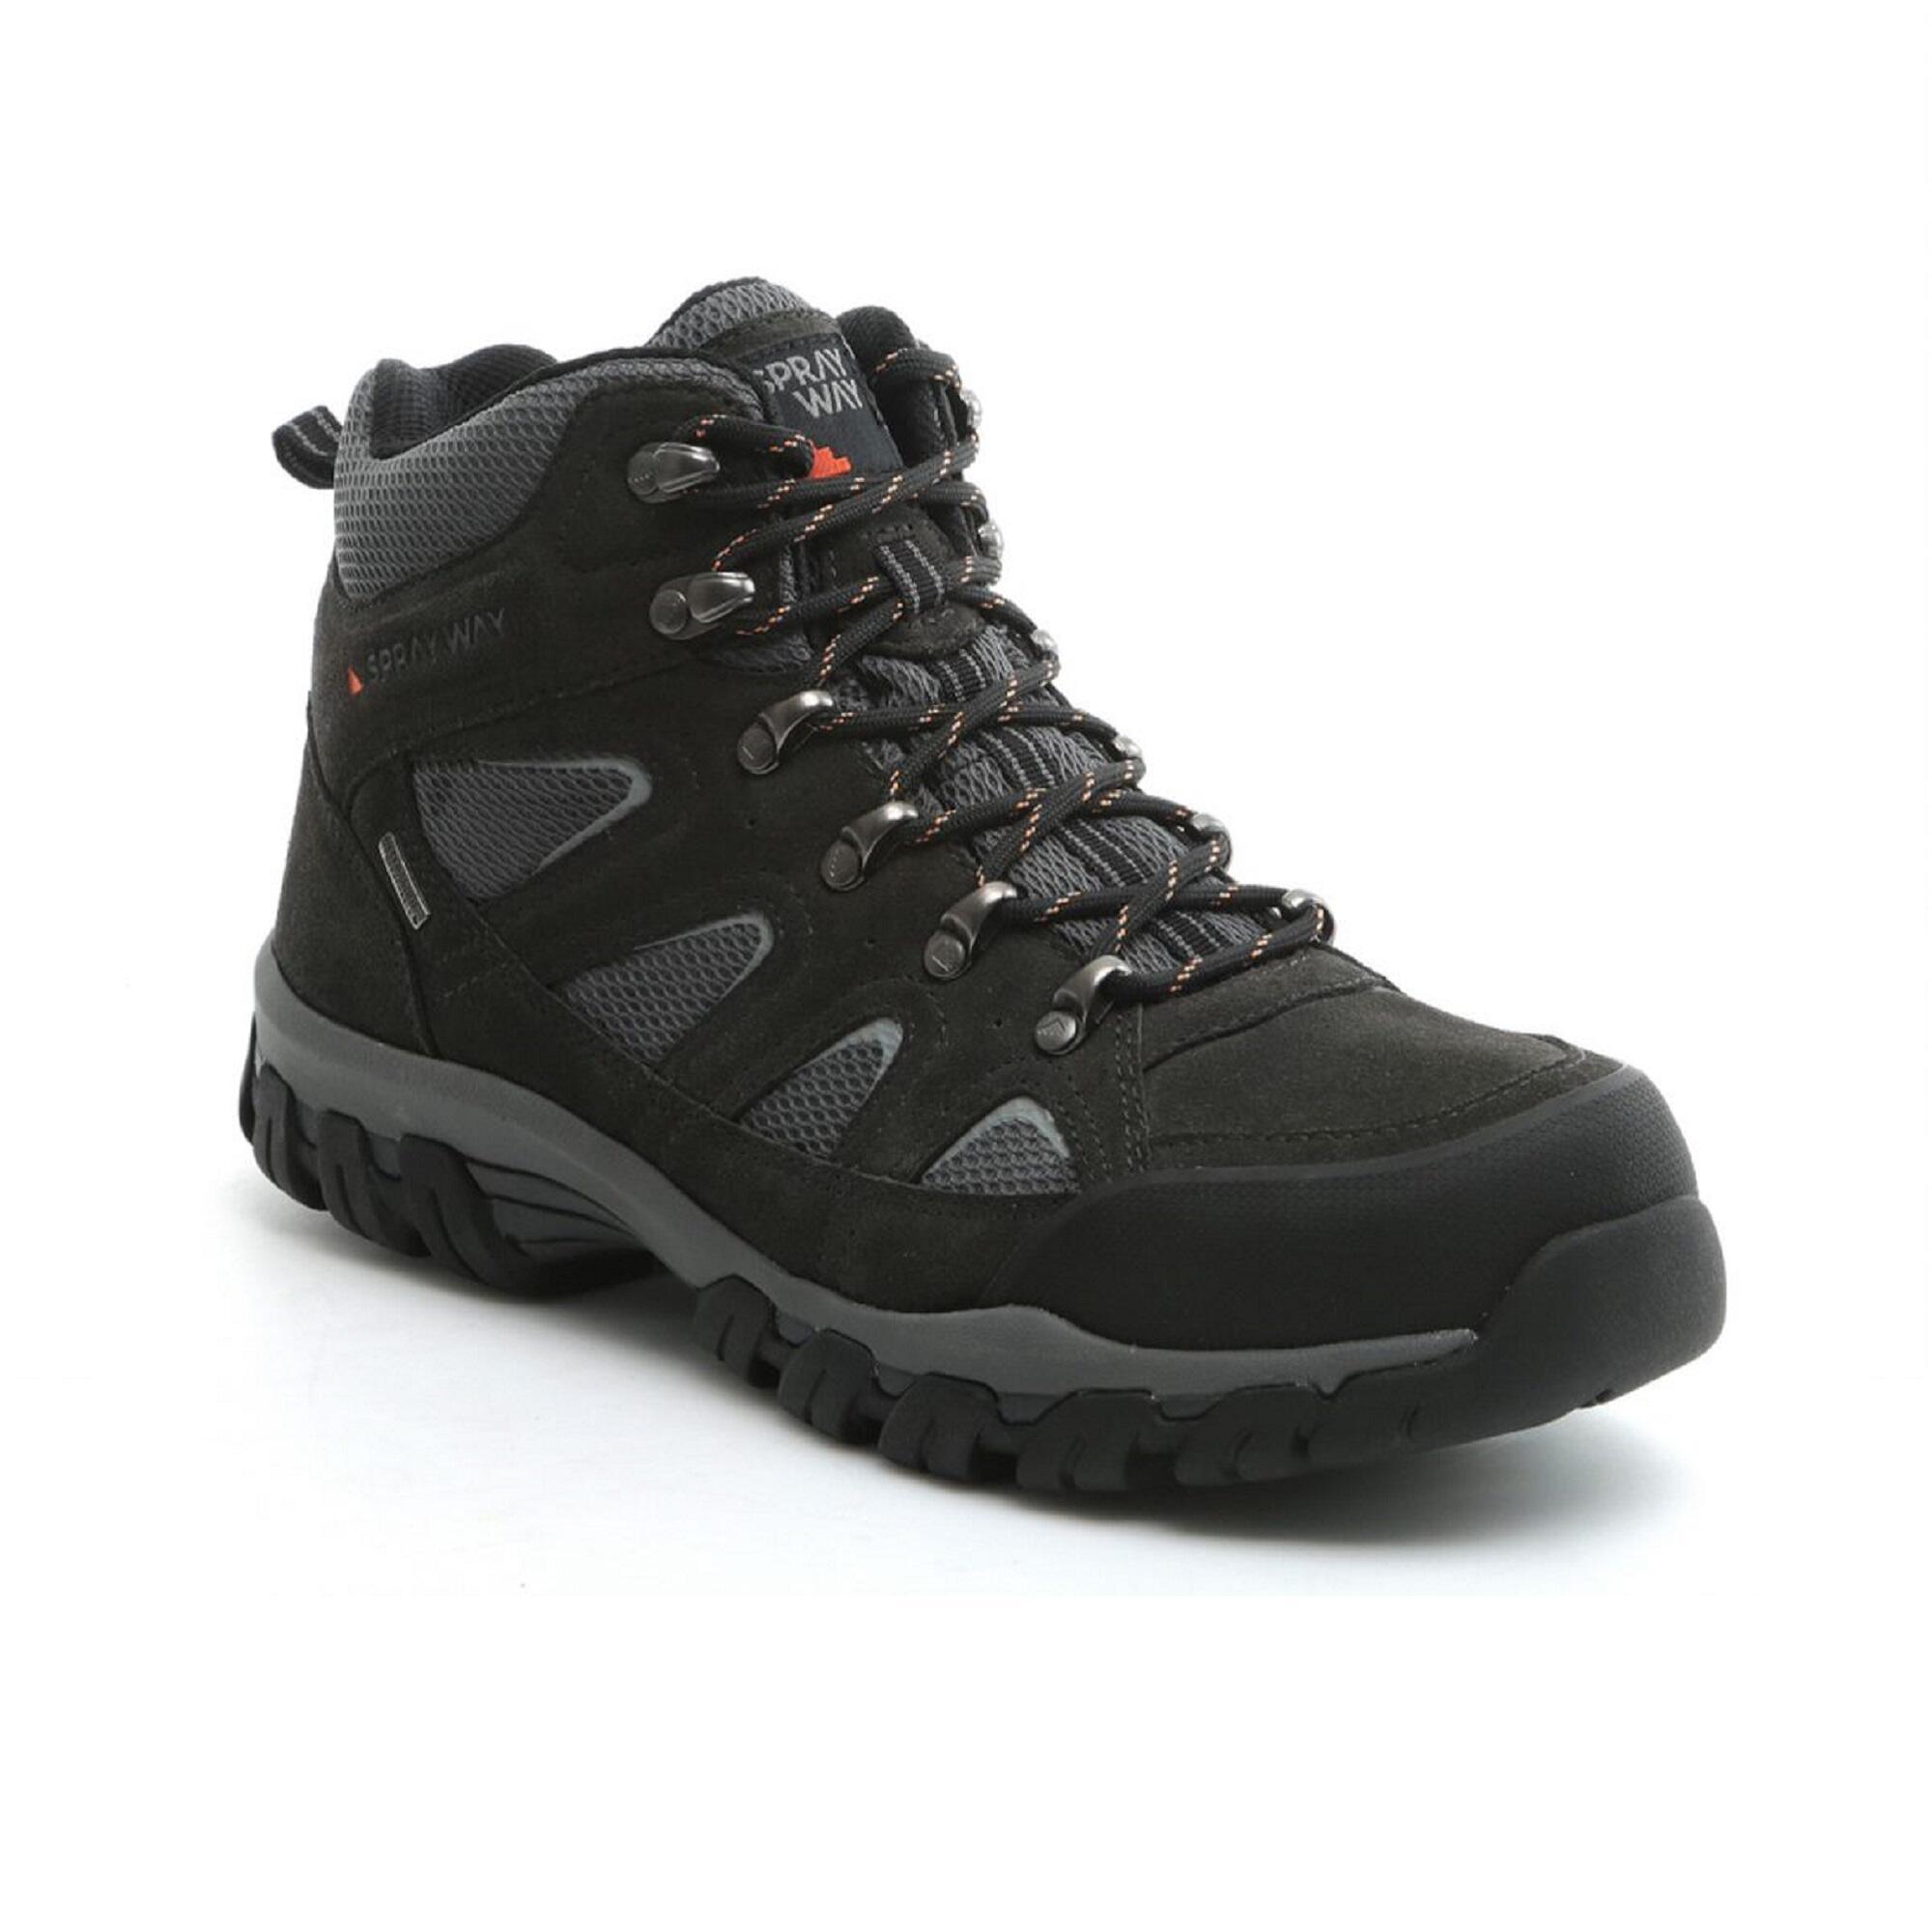 Men's waterproof walking boots - Sprayway Mull mid - Black 1/6